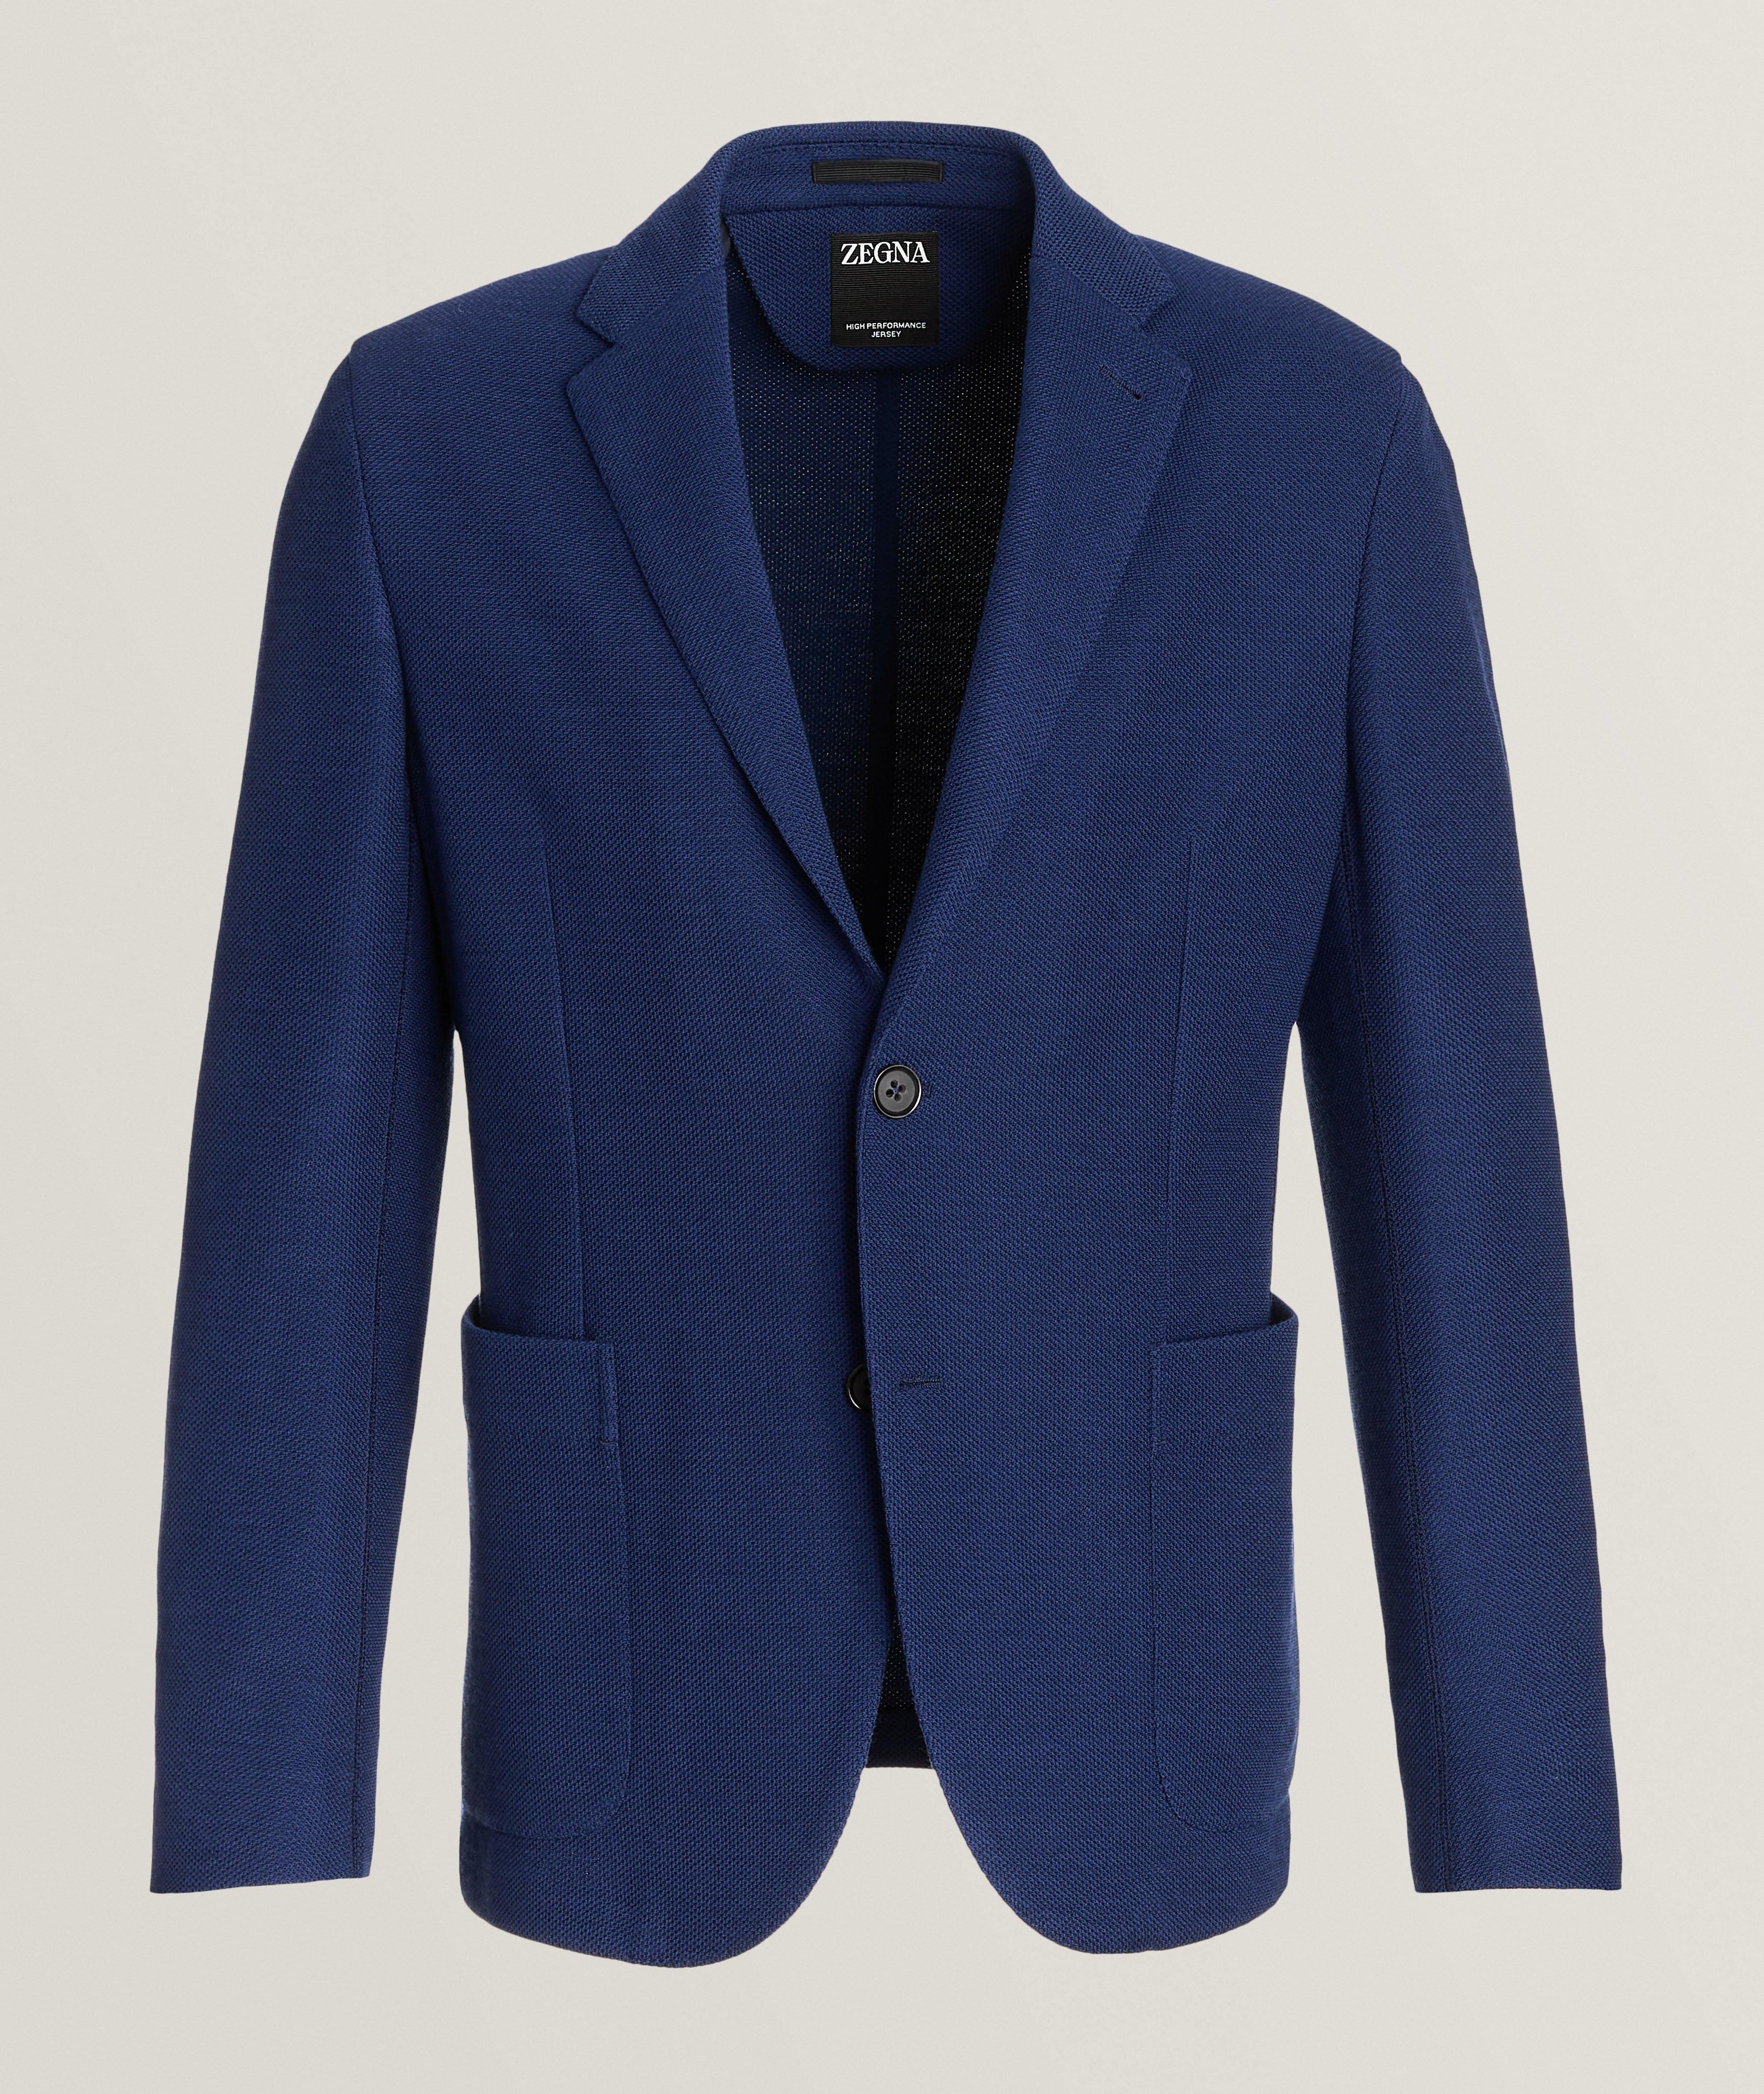 High Performance Jersey Wool-Blend Sport Jacket image 0